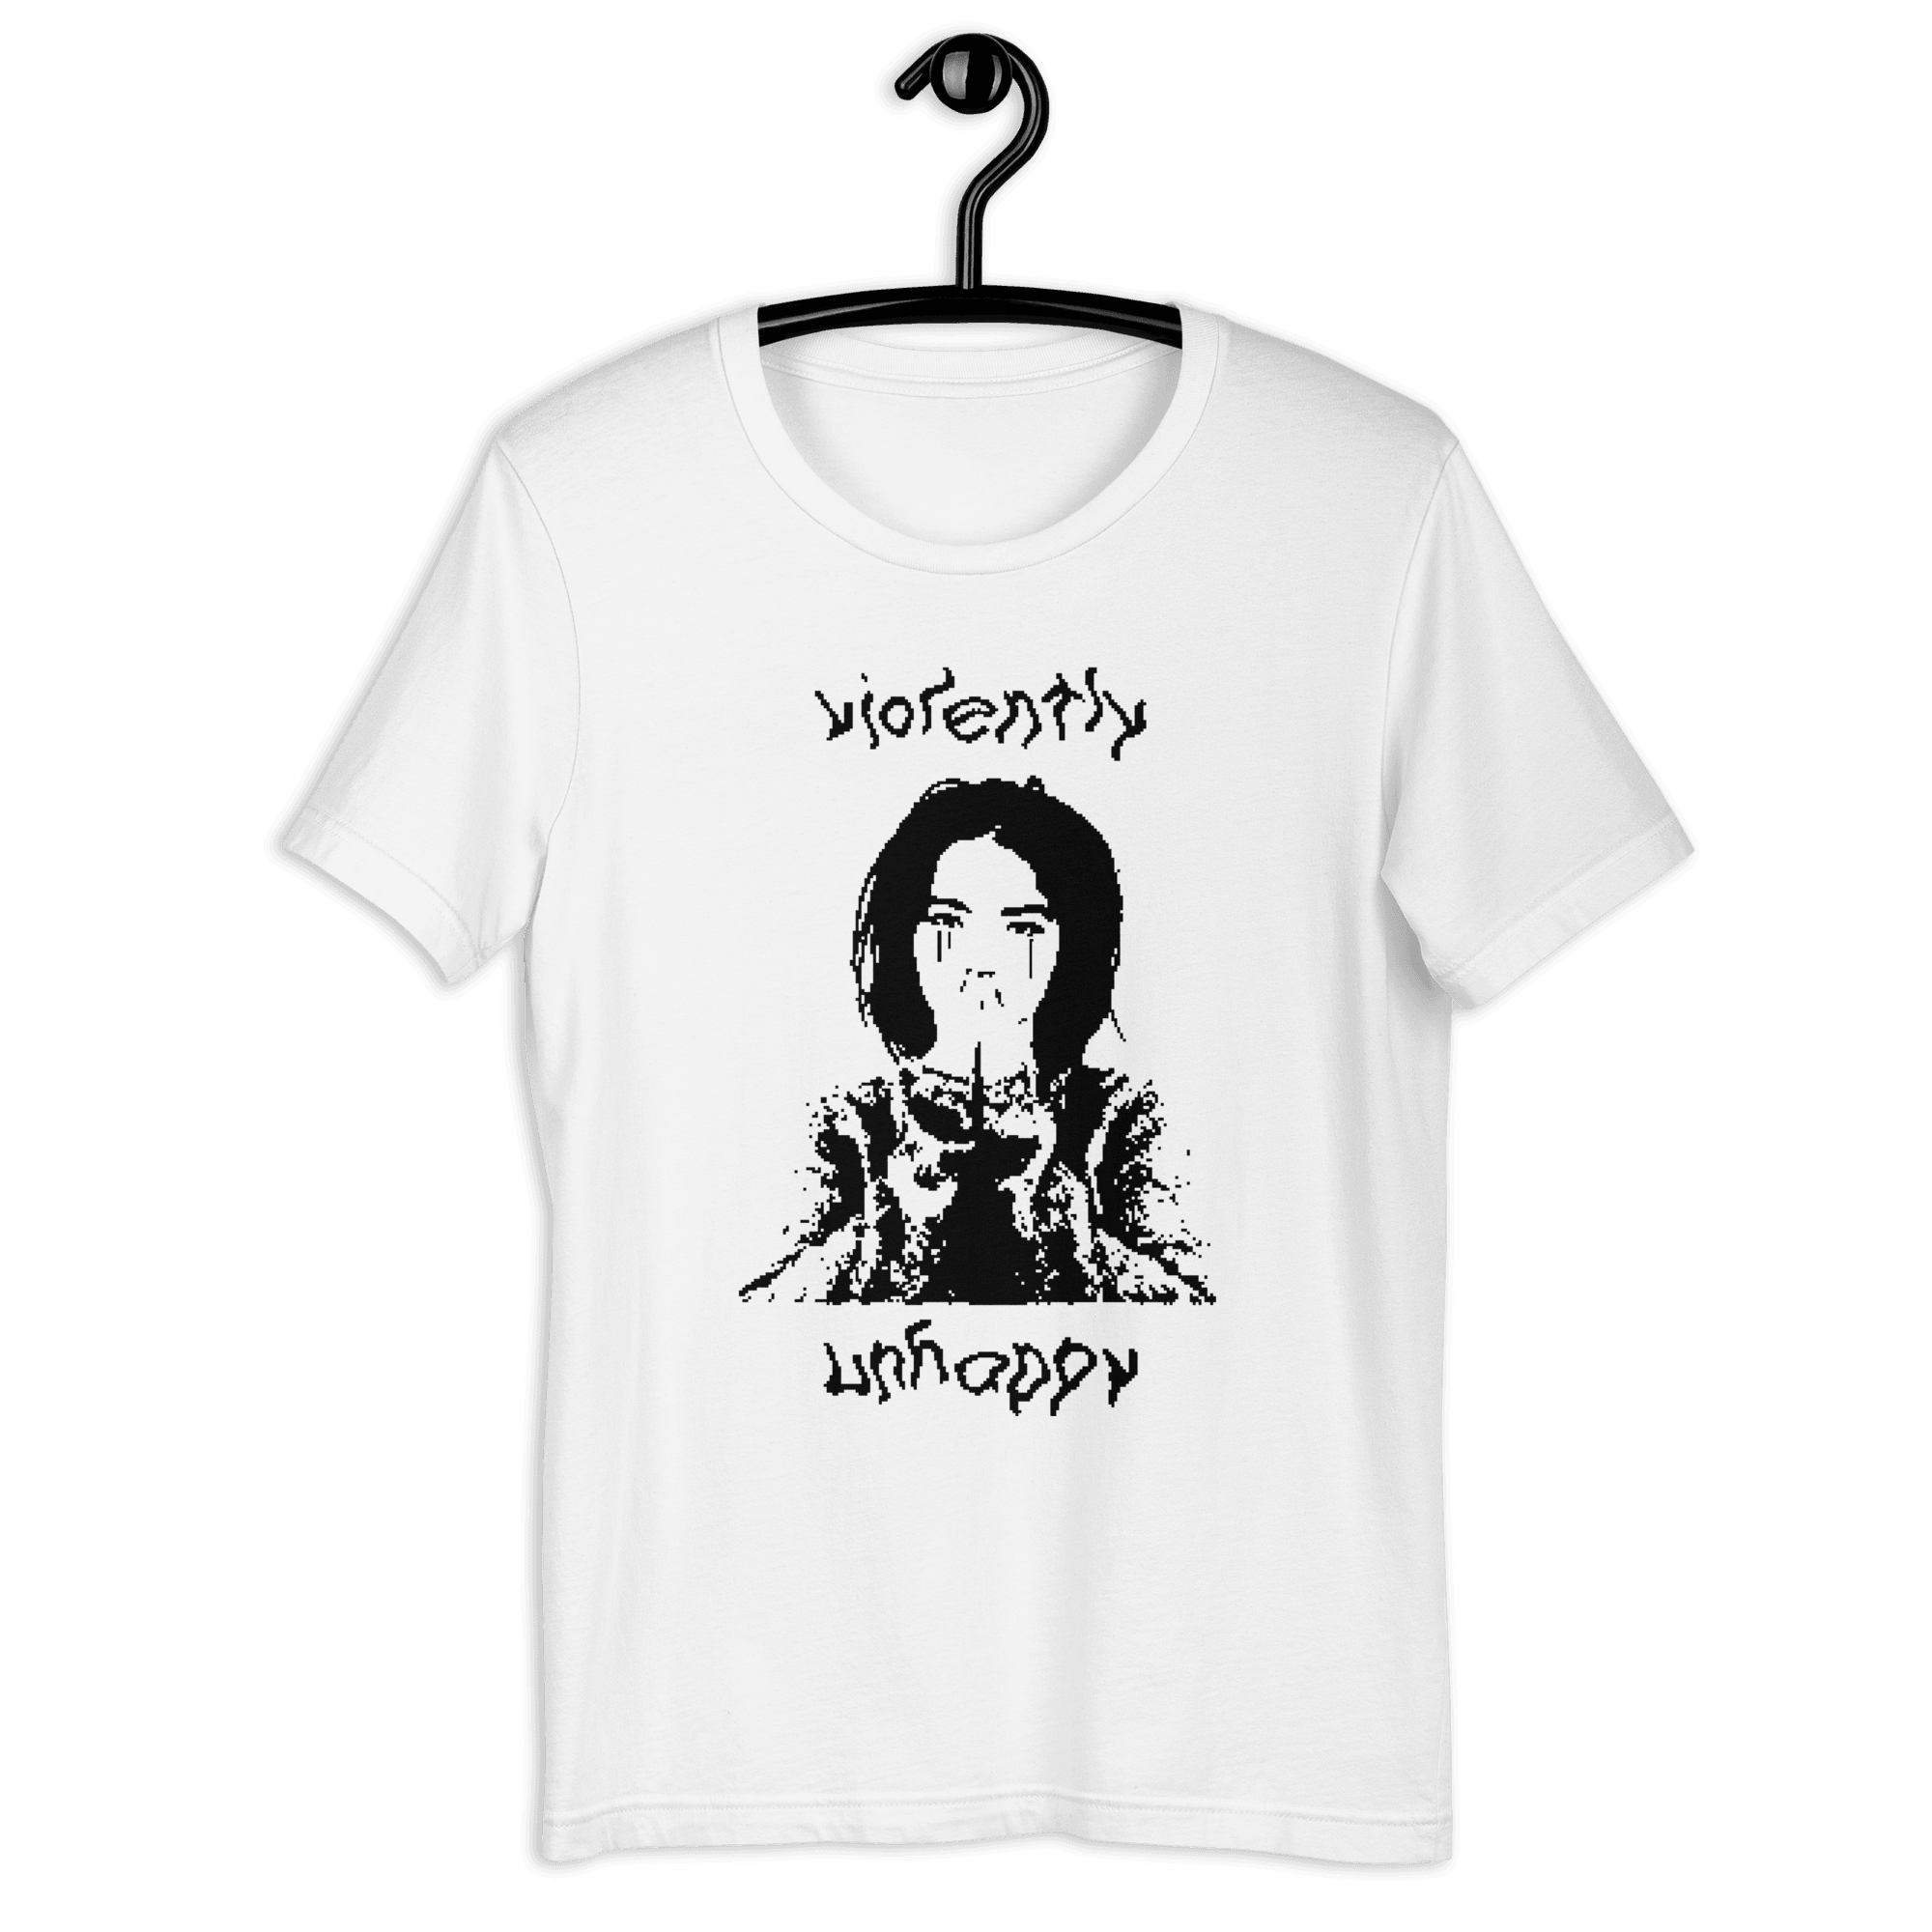 Violently Unhappy® White T-Shirt - Kikillo Club